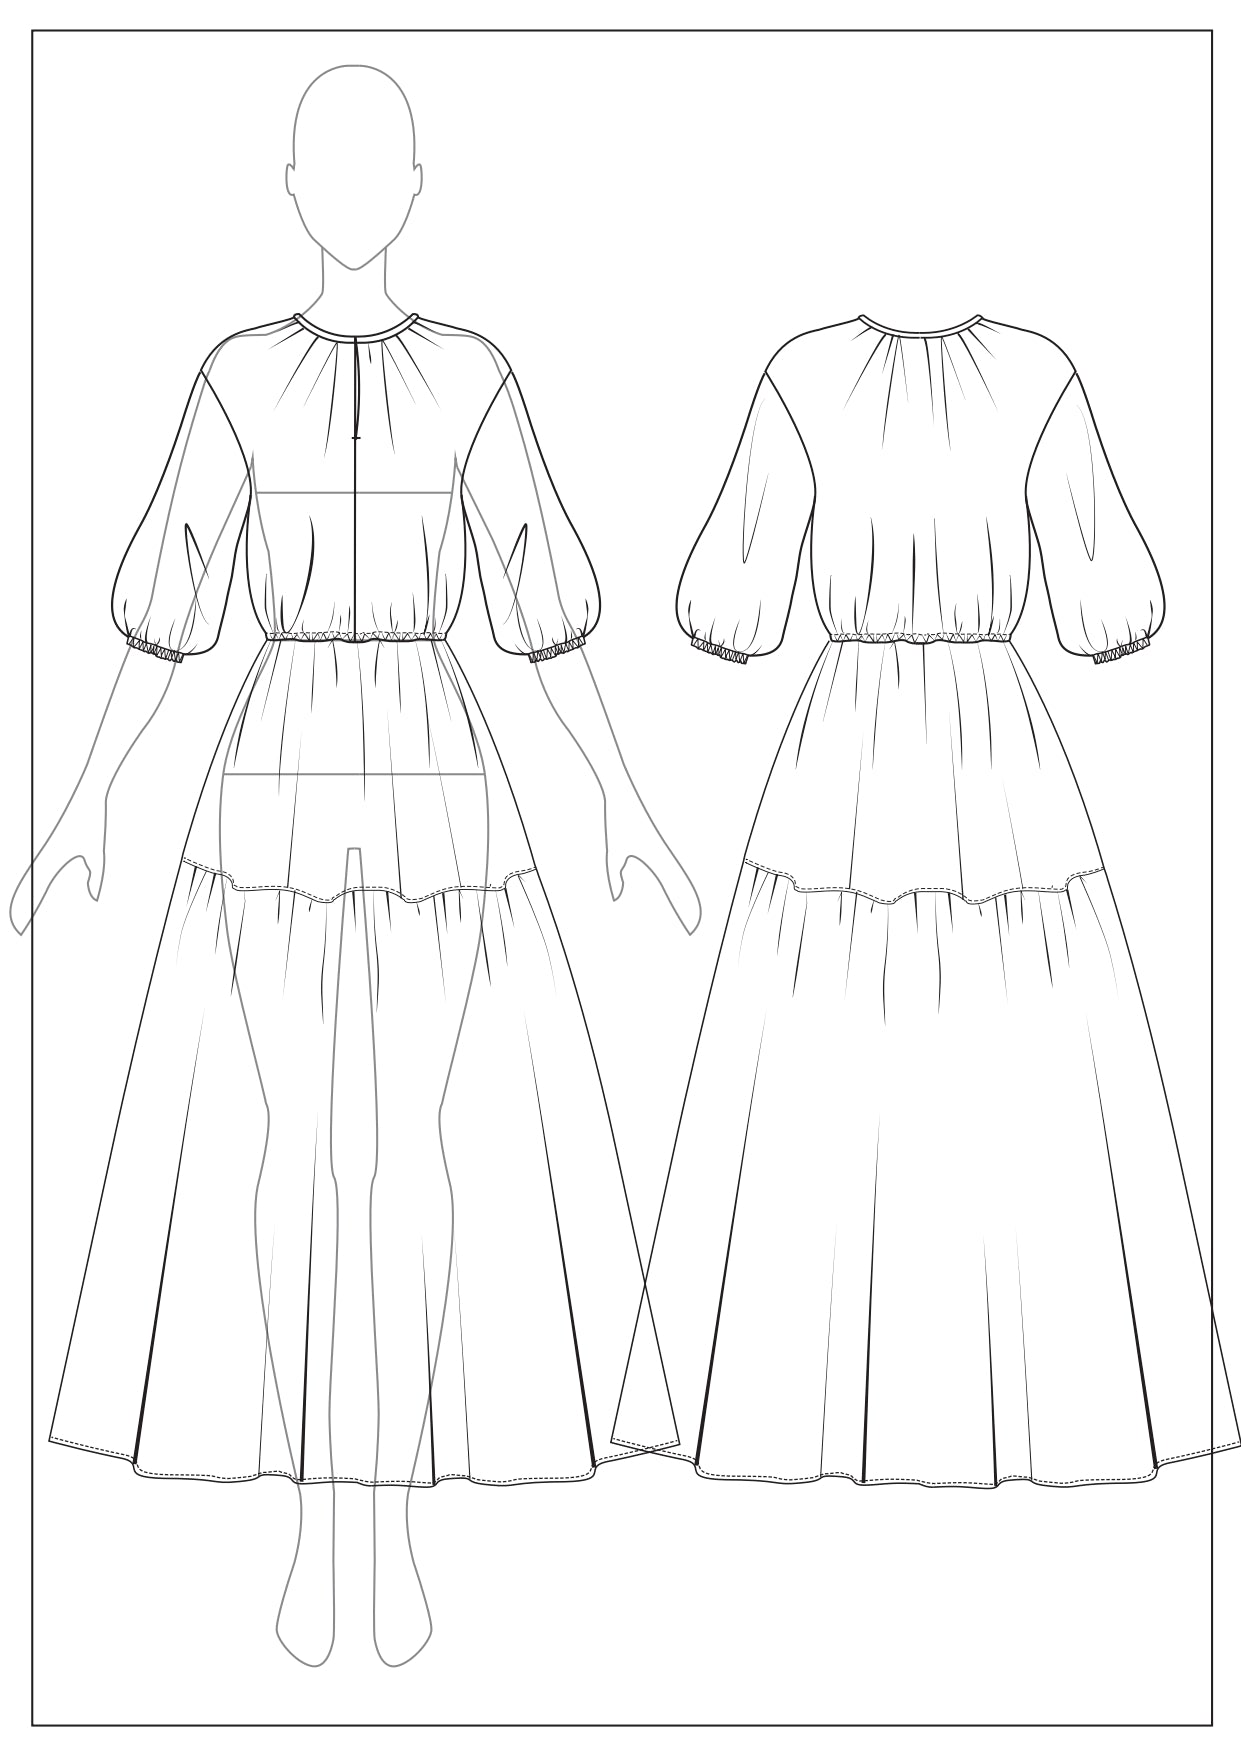 Kate’s Sewing Patterns Athena Dress